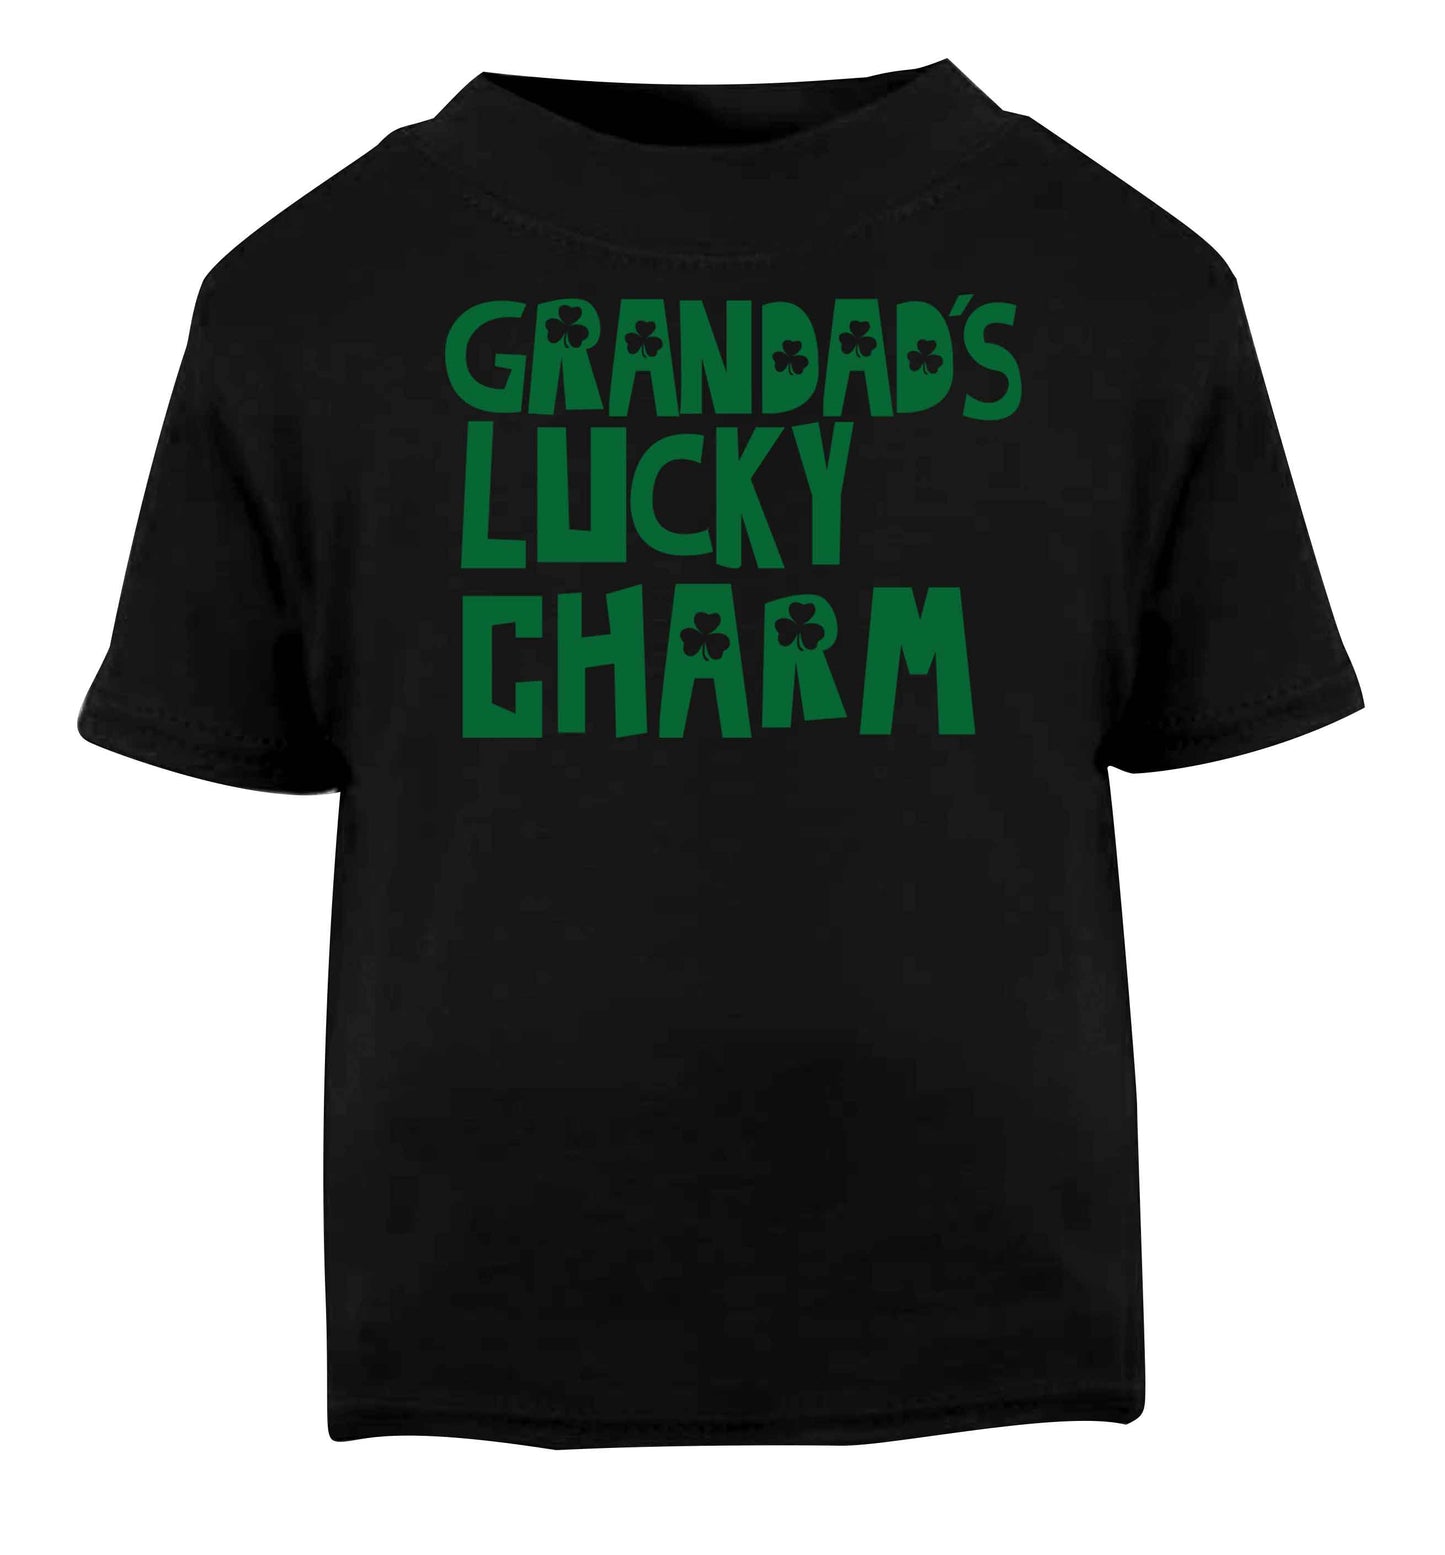 Grandad's lucky charm  Black baby toddler Tshirt 2 years